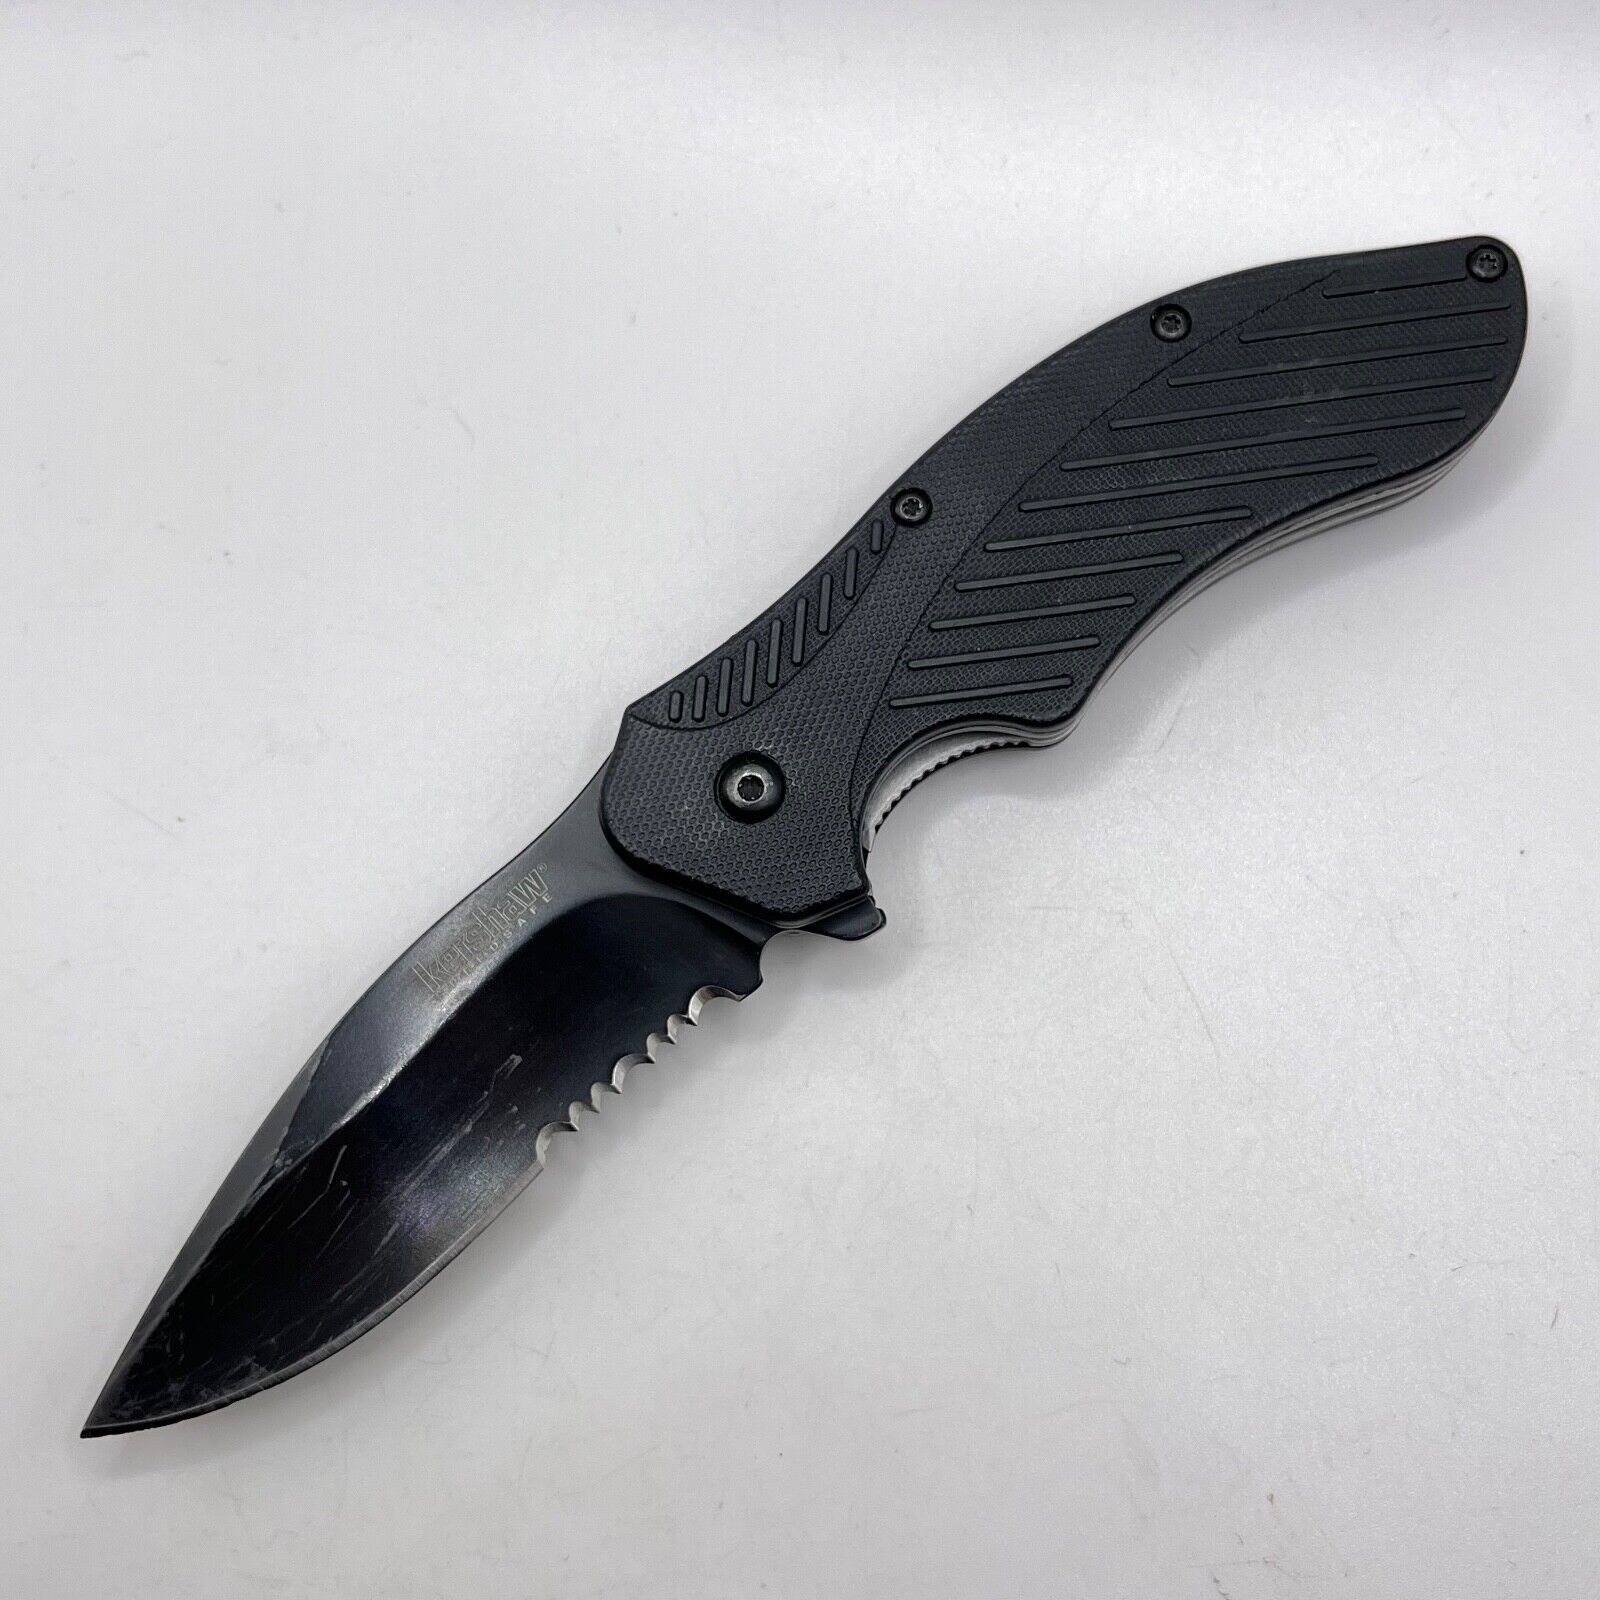 Kershaw Clash 1605CKTST Black Assisted Pocket Knife 1605 - Great condition